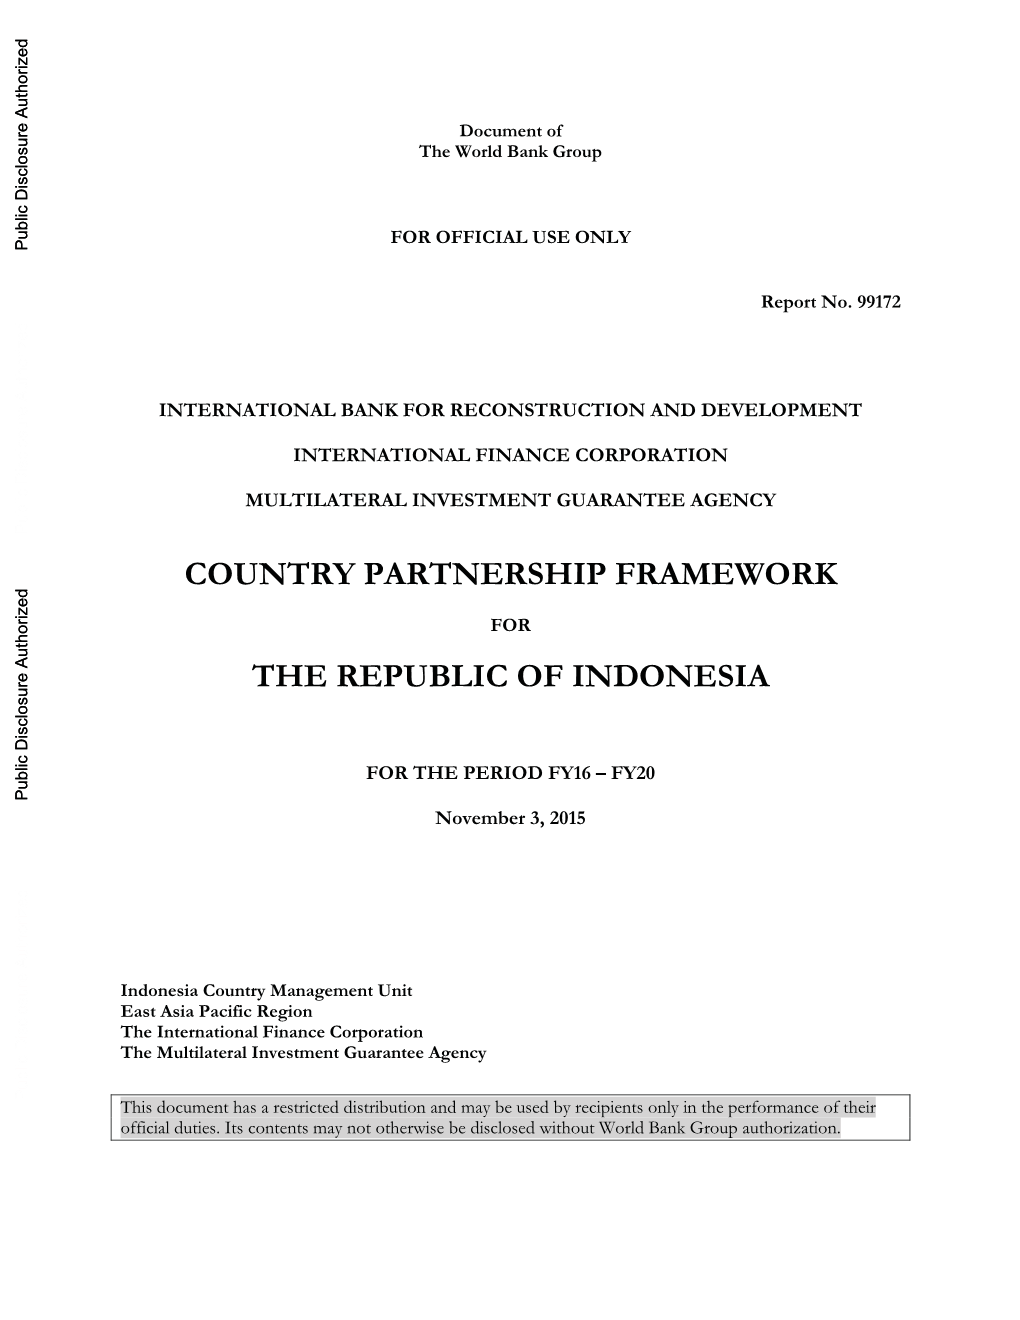 Country Partnership Framework